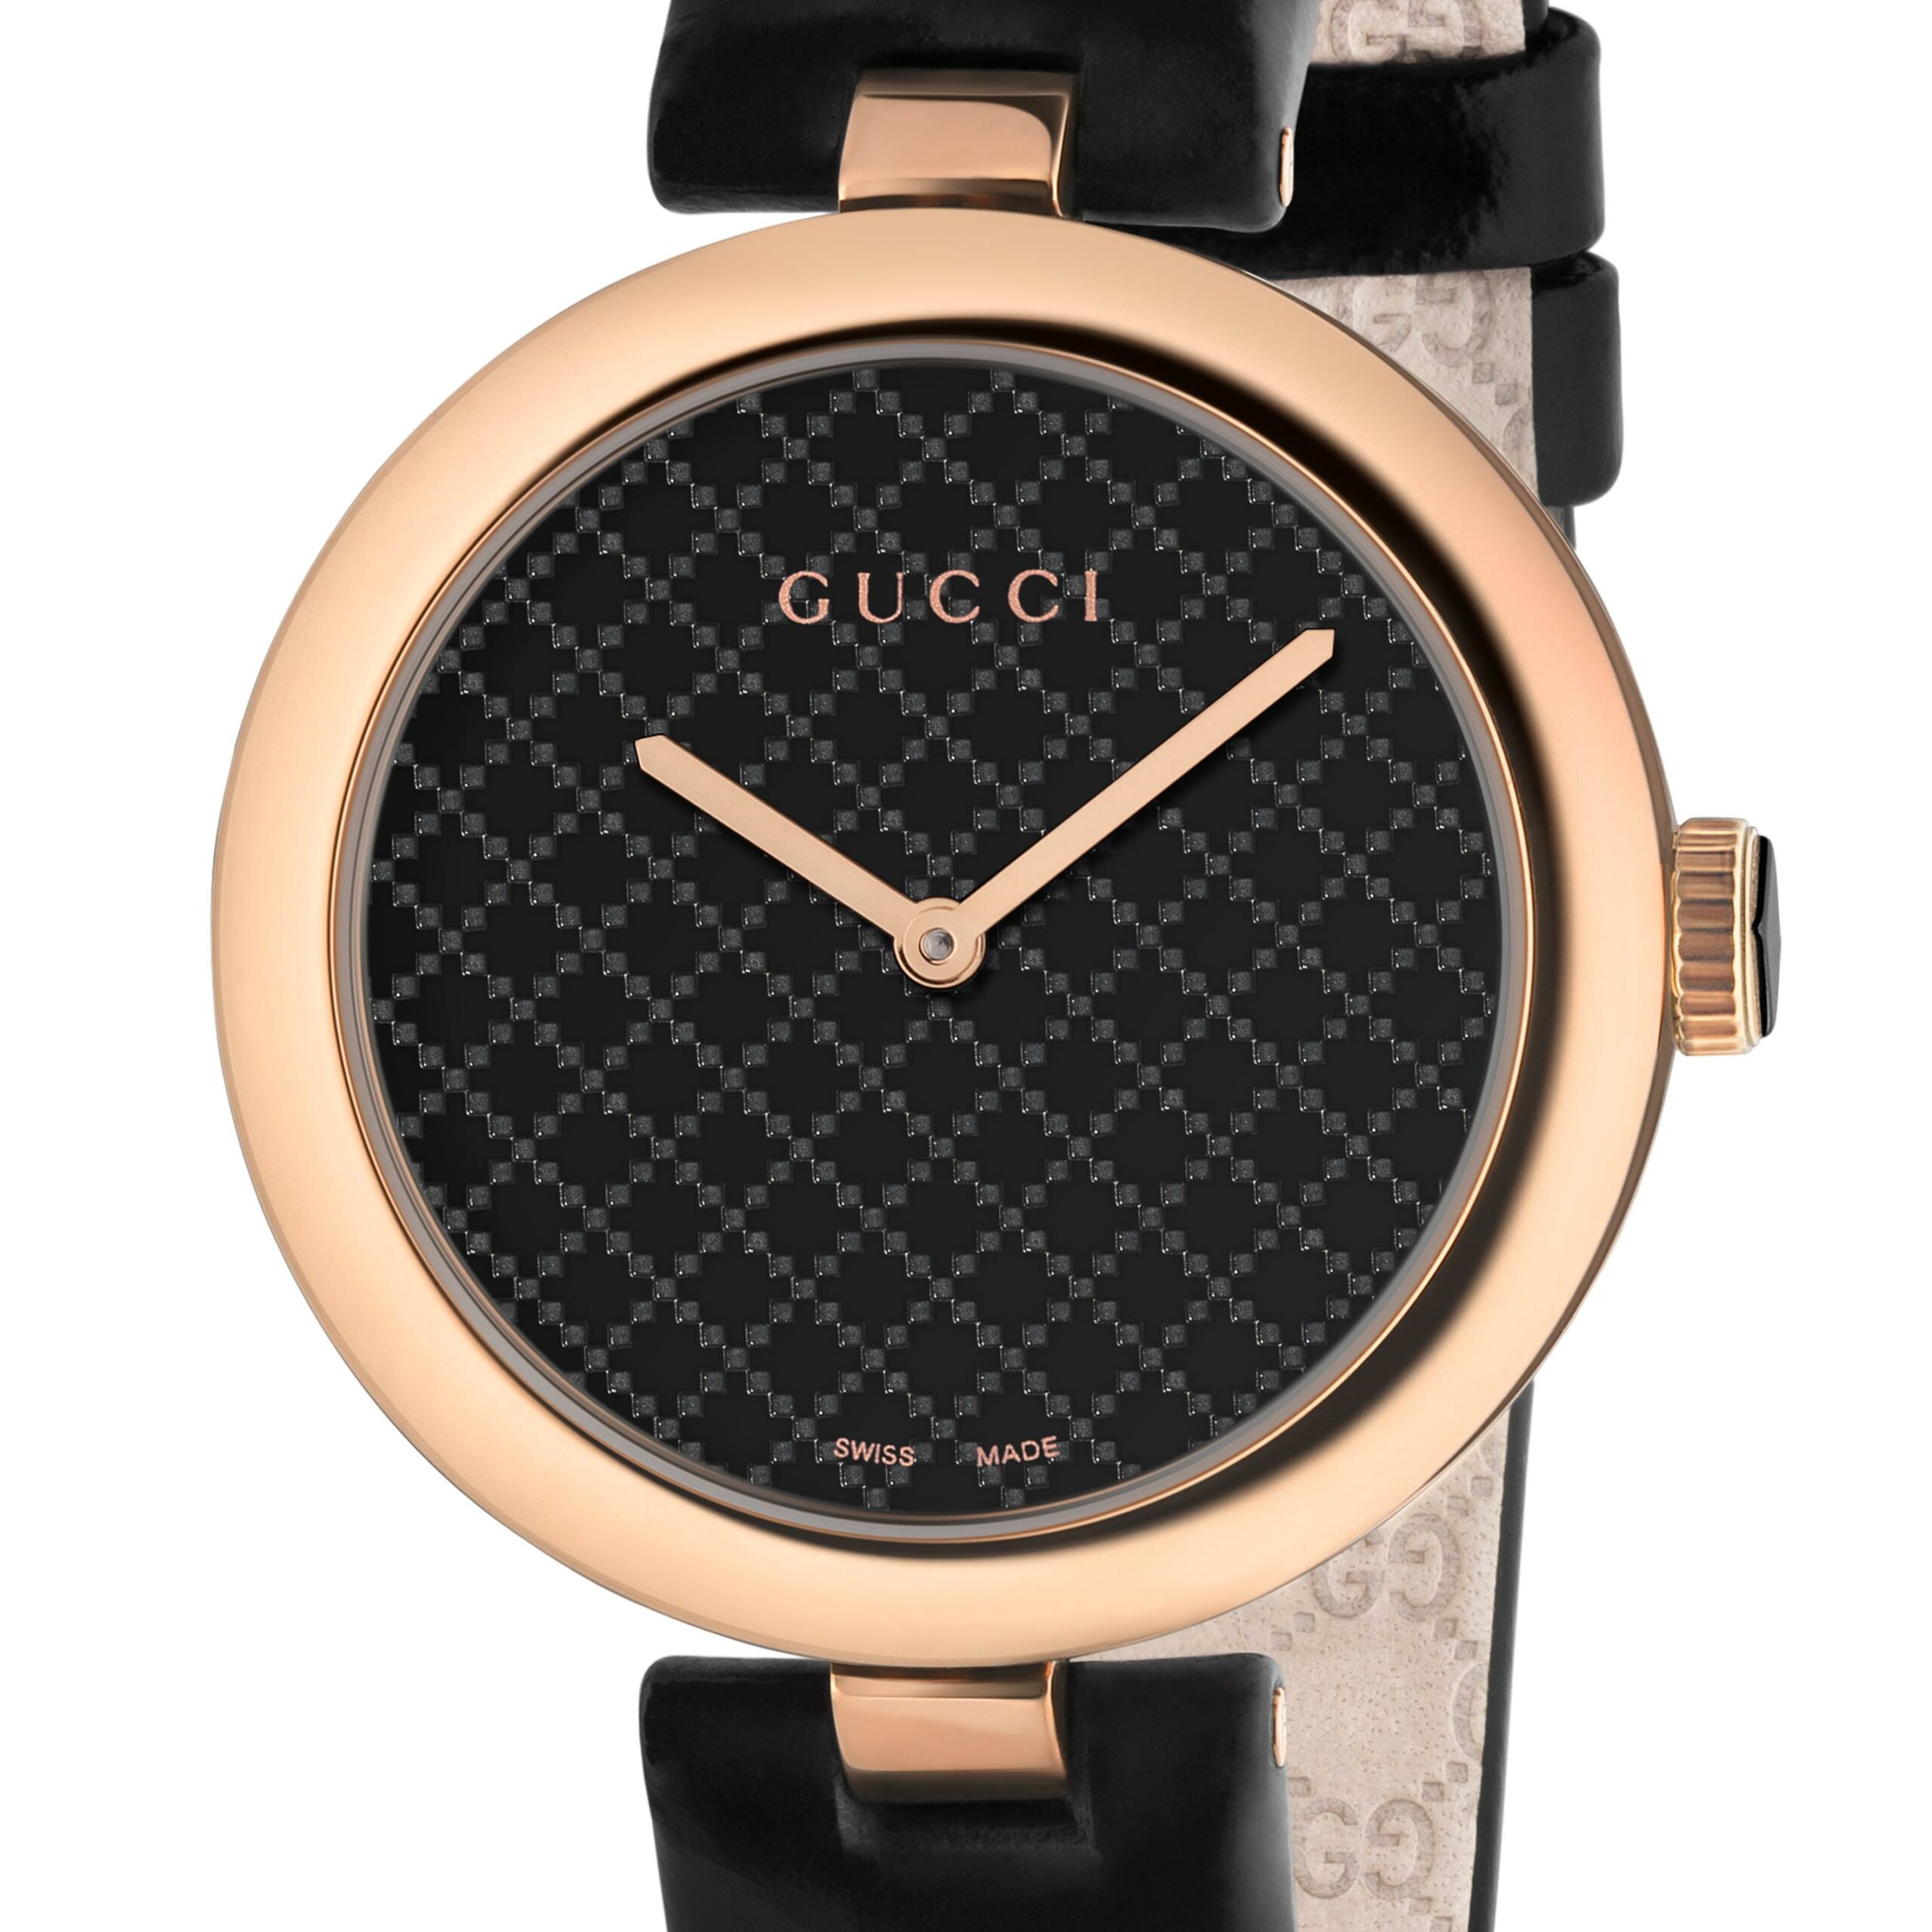 Gucci watch Diamantissima small black and rose gold PVD case